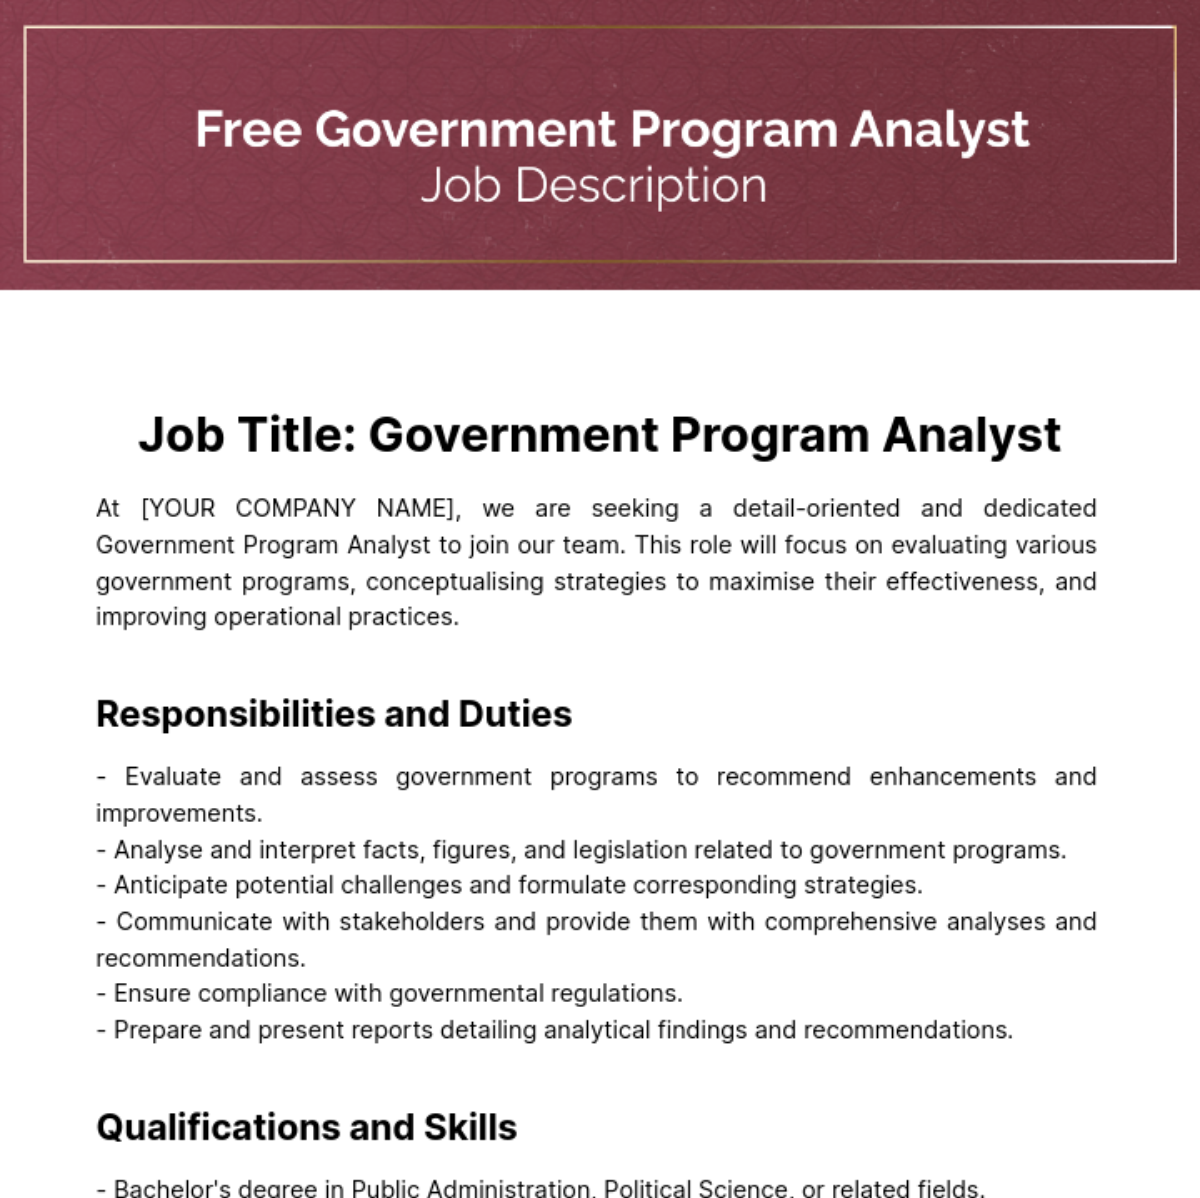 Free Government Program Analyst Job Description Template